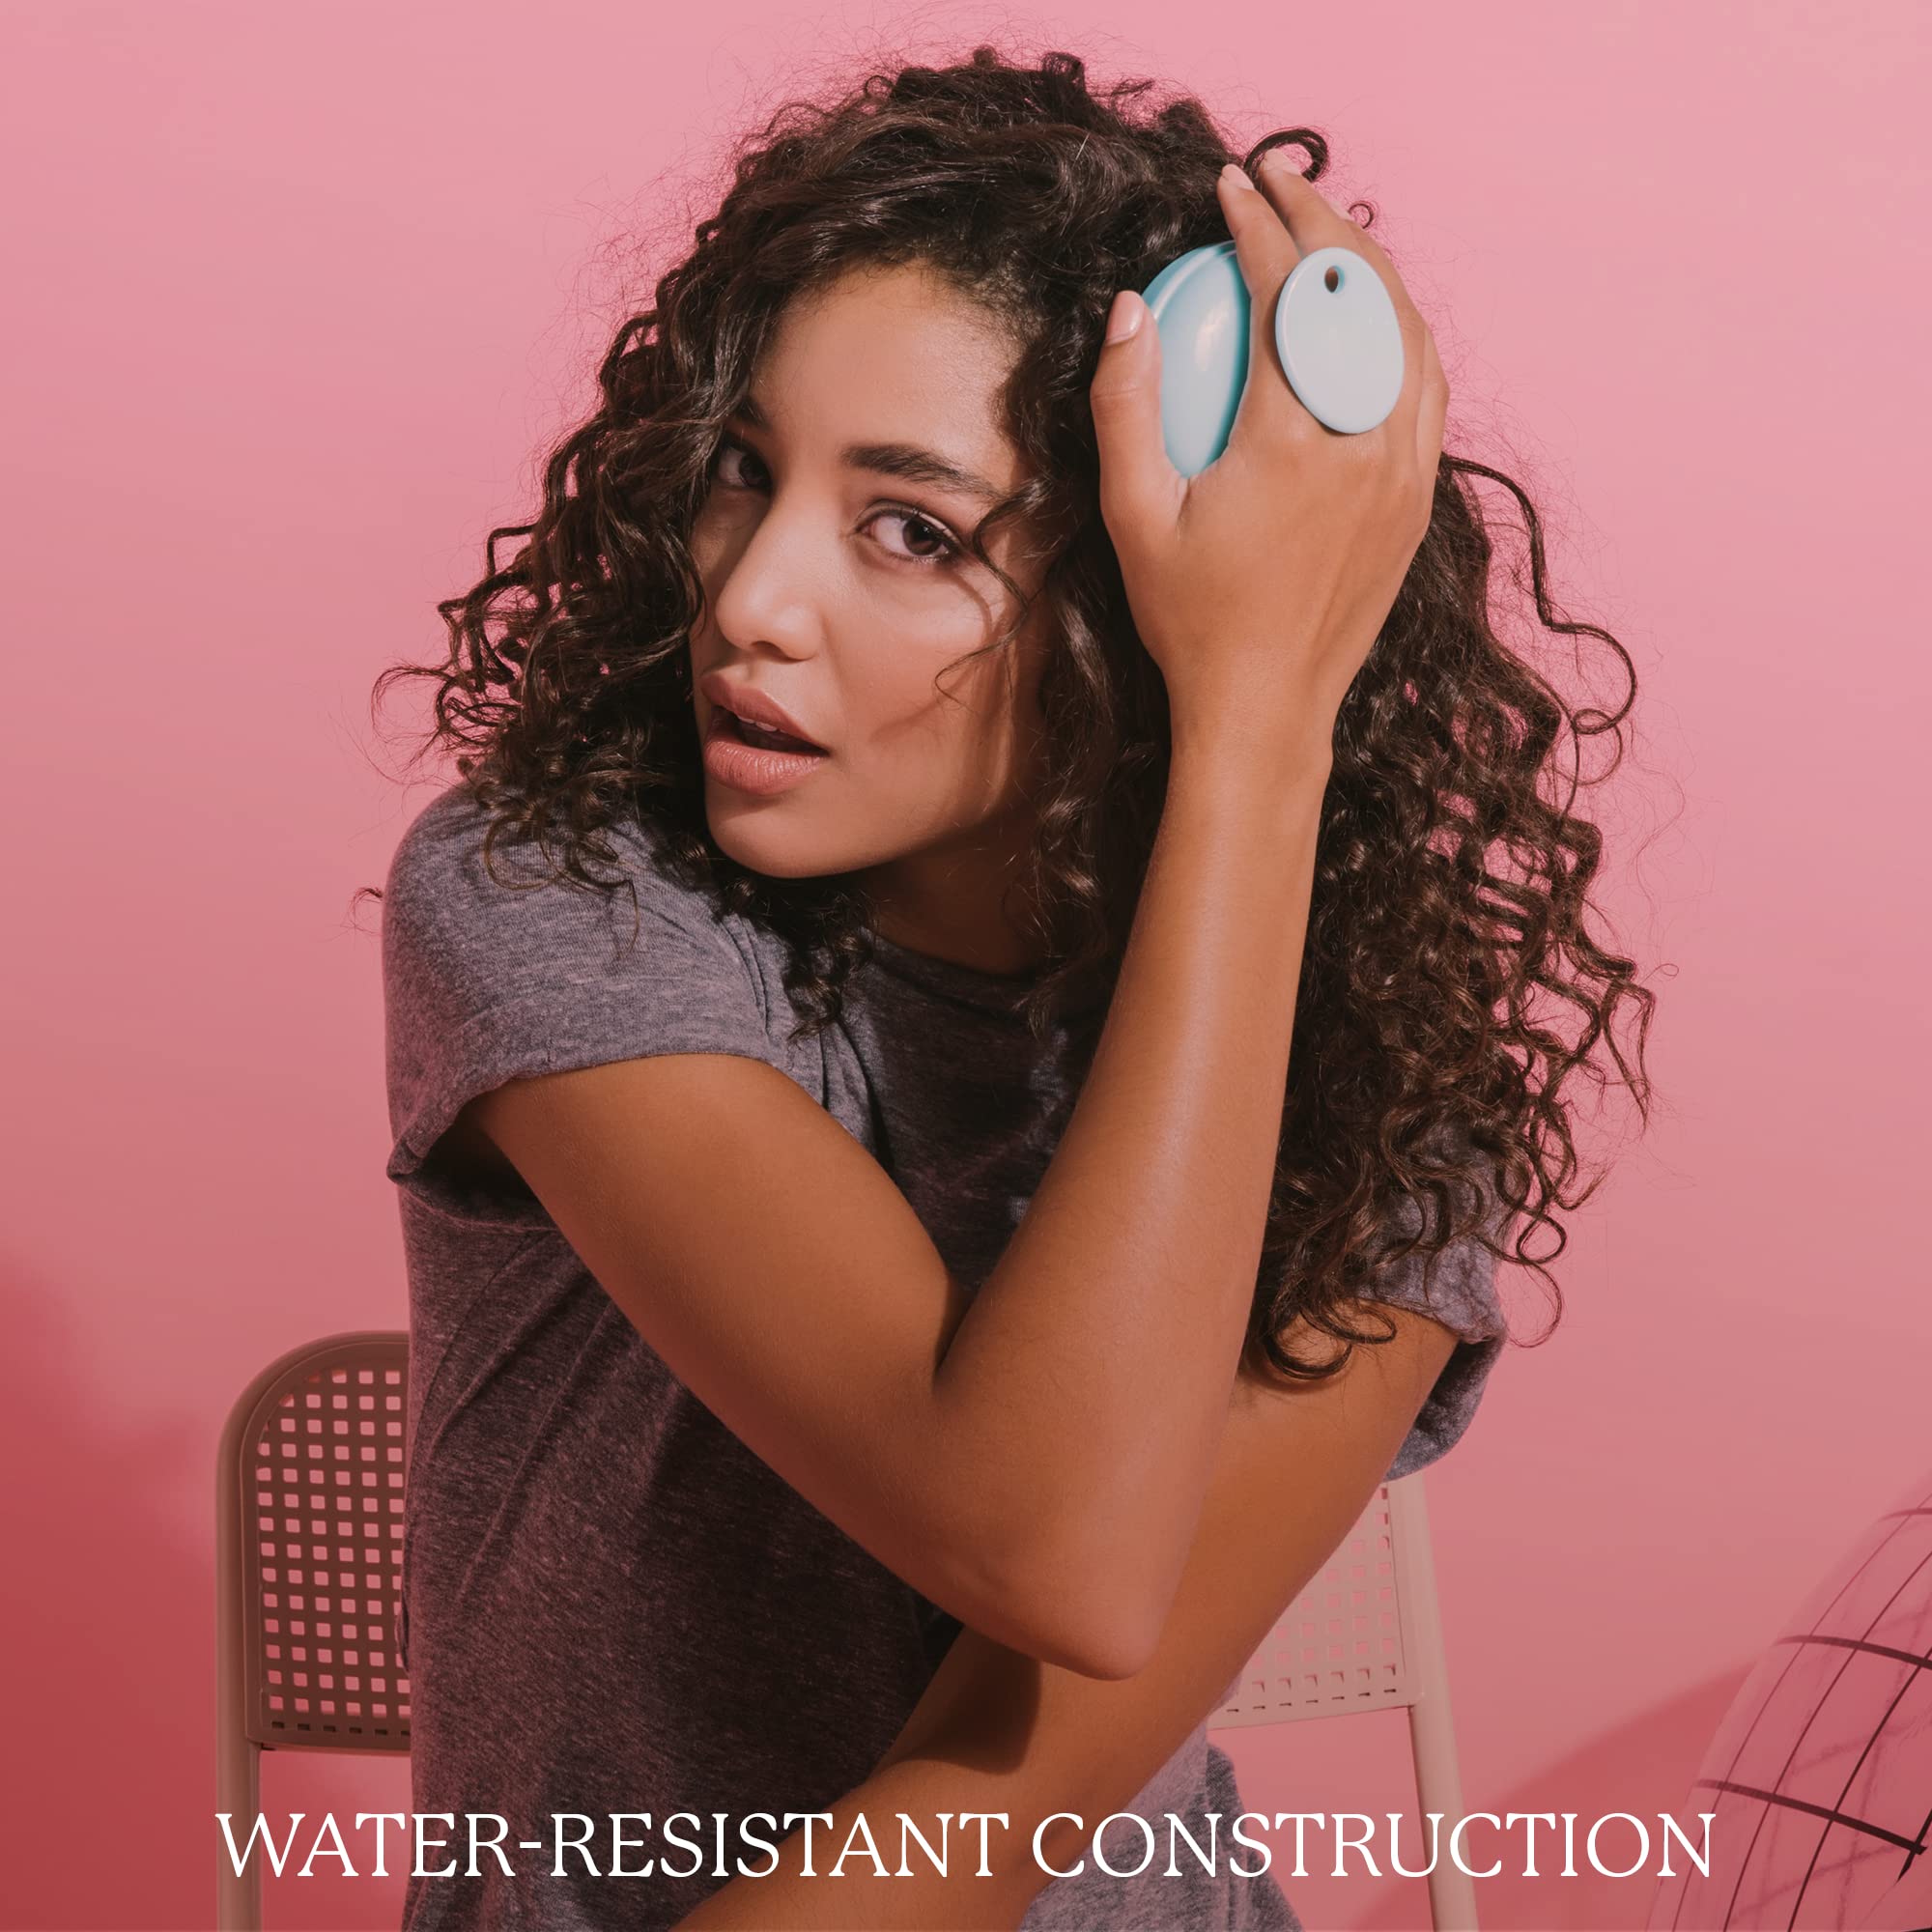 Scalp Massaging Shampoo Brush, Purple - Ergonomic Handheld Vibrating Massager with Soft Flexible Silicone Bristles - Exfoliating Brush for Dandruff, Flaky Skin, Residue & Hair Growth